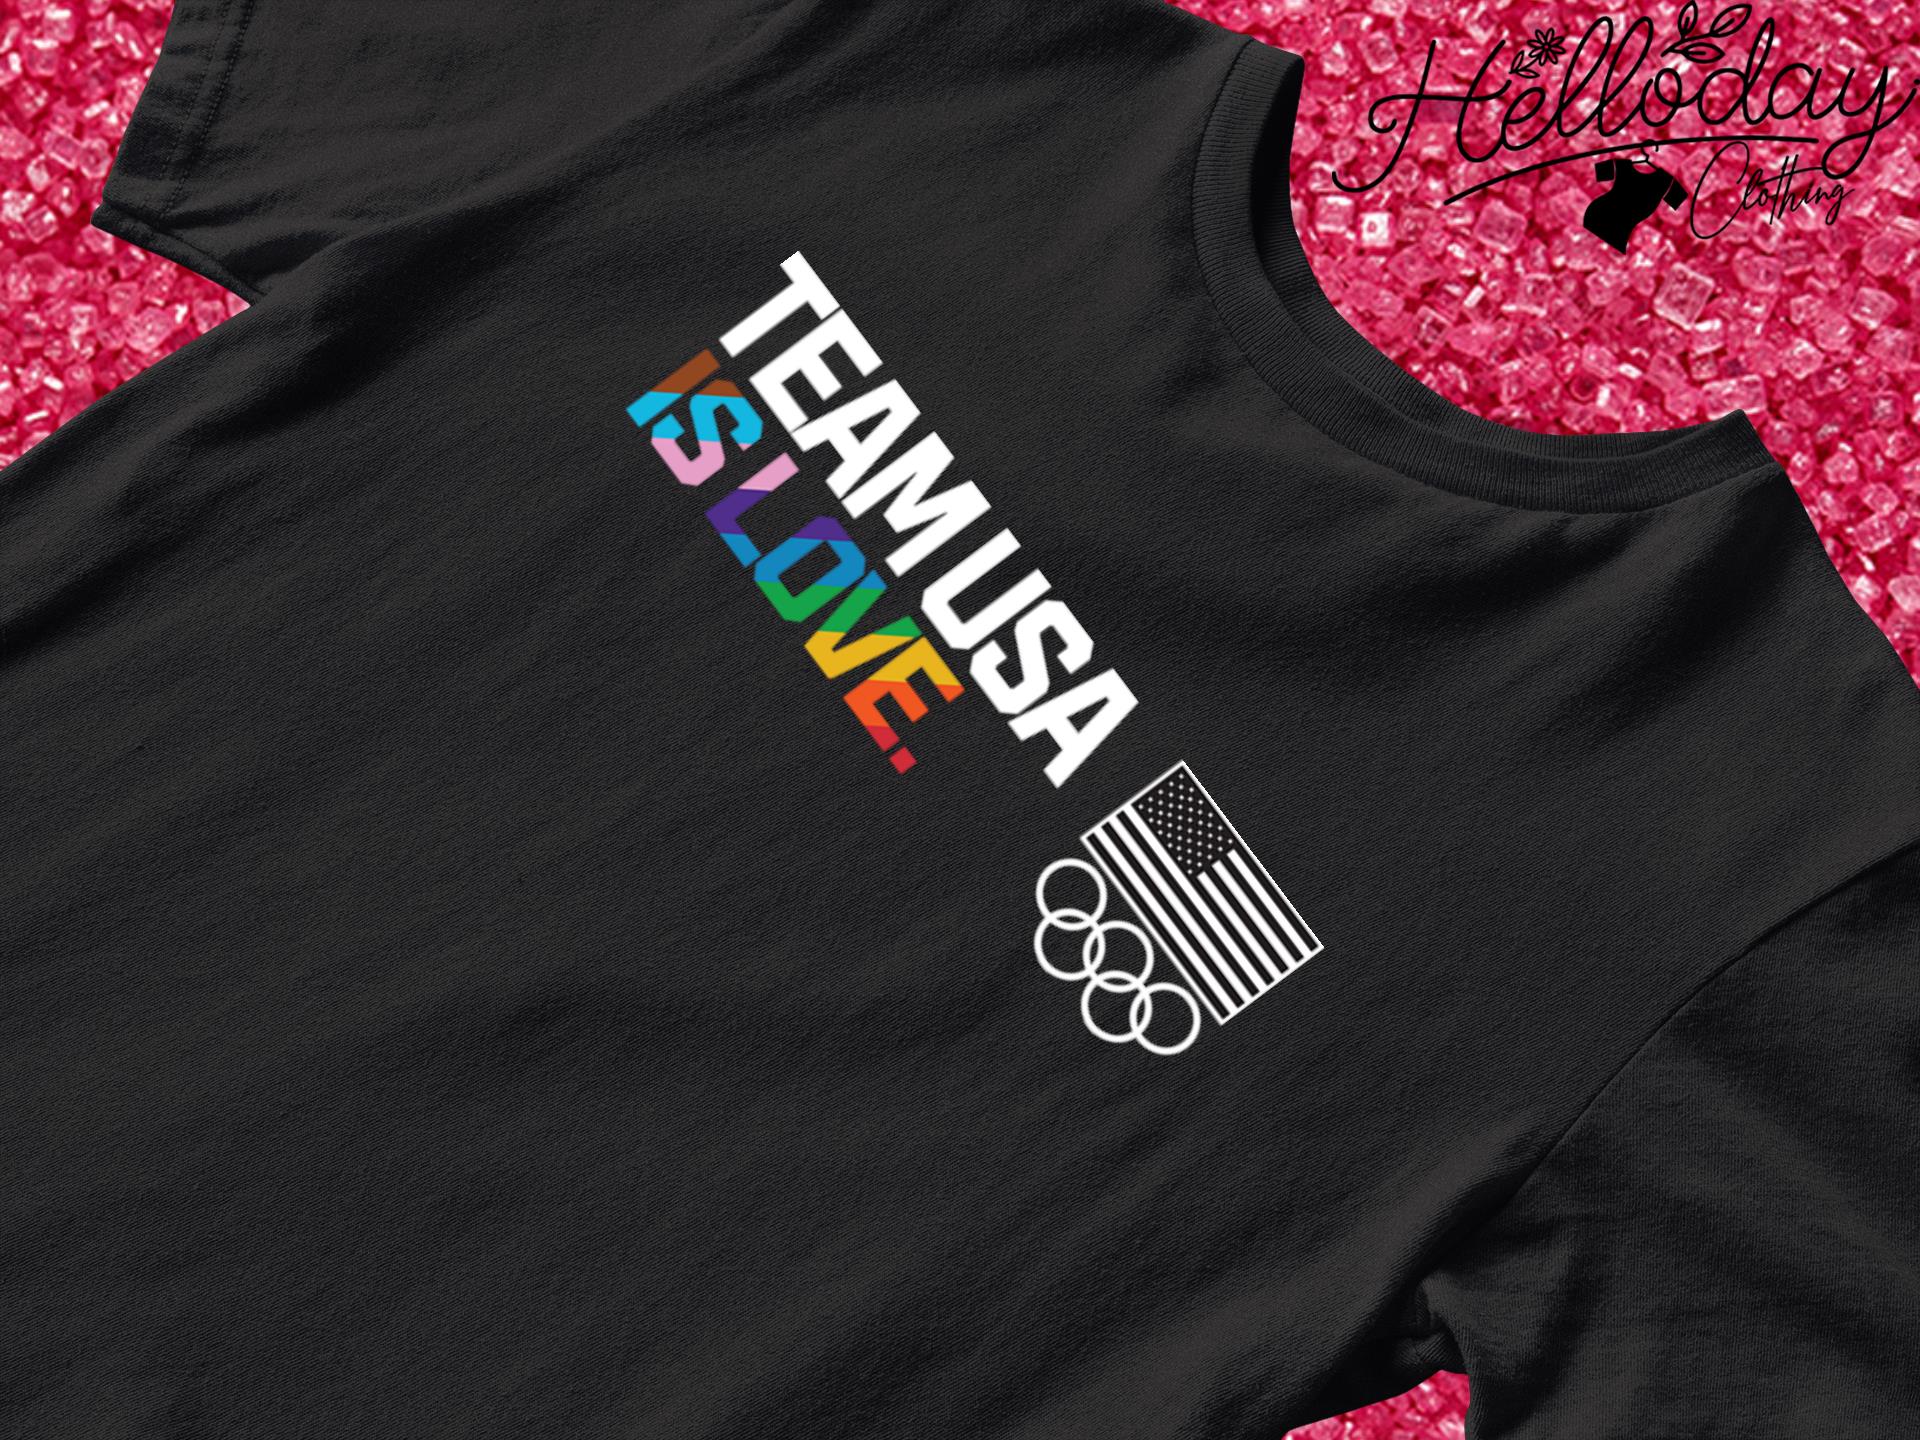 Team USA Olympics LGBT Pride shirt